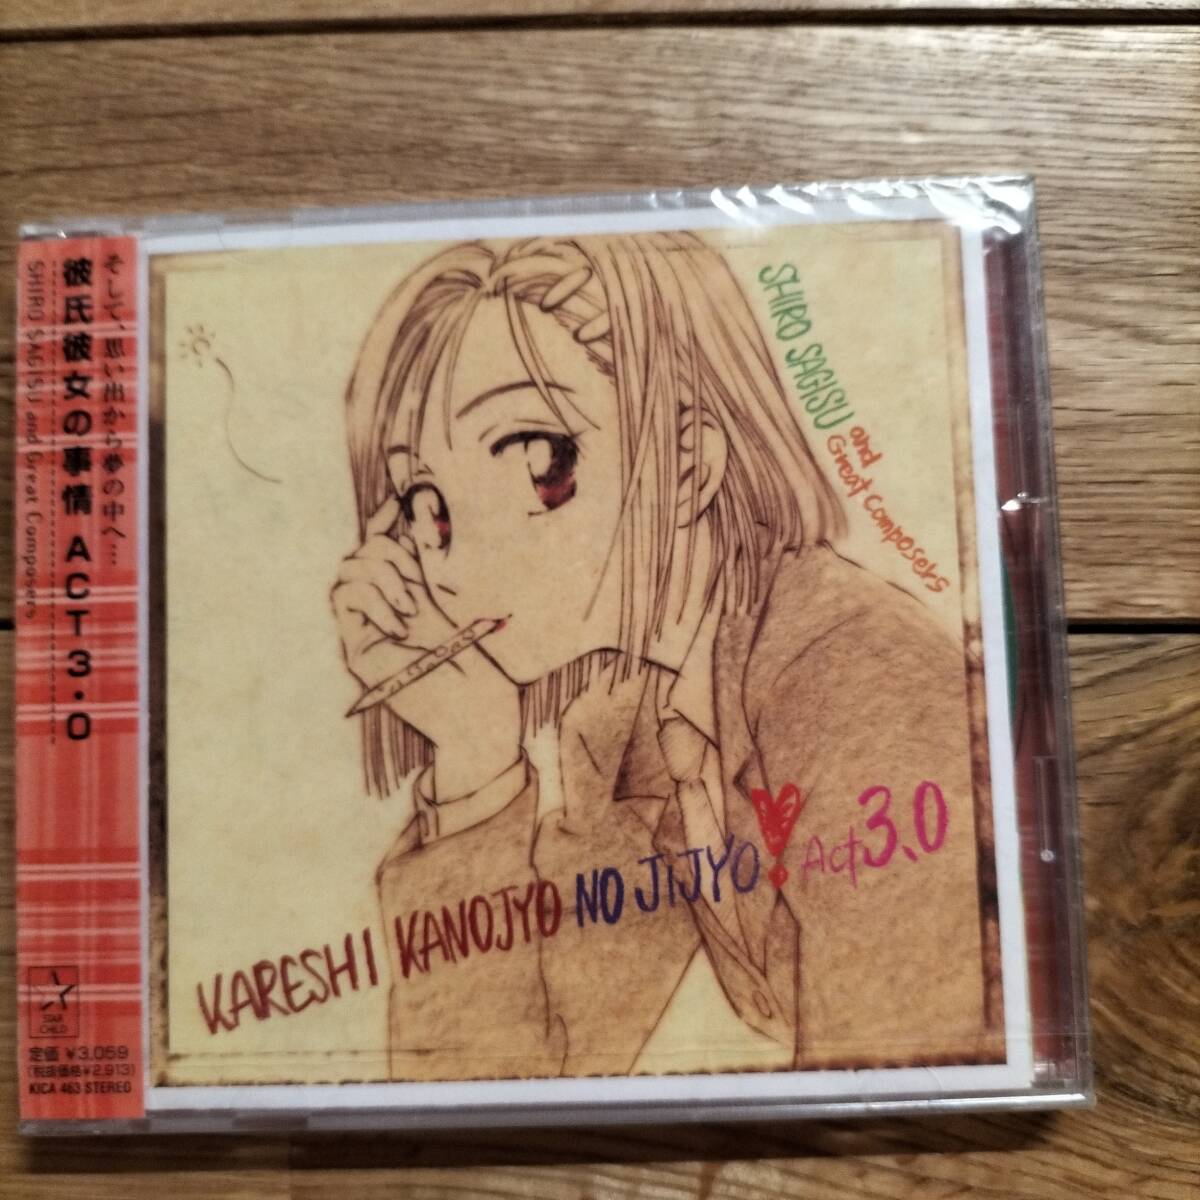  Kareshi Kanojo no Jijou soundtrack 